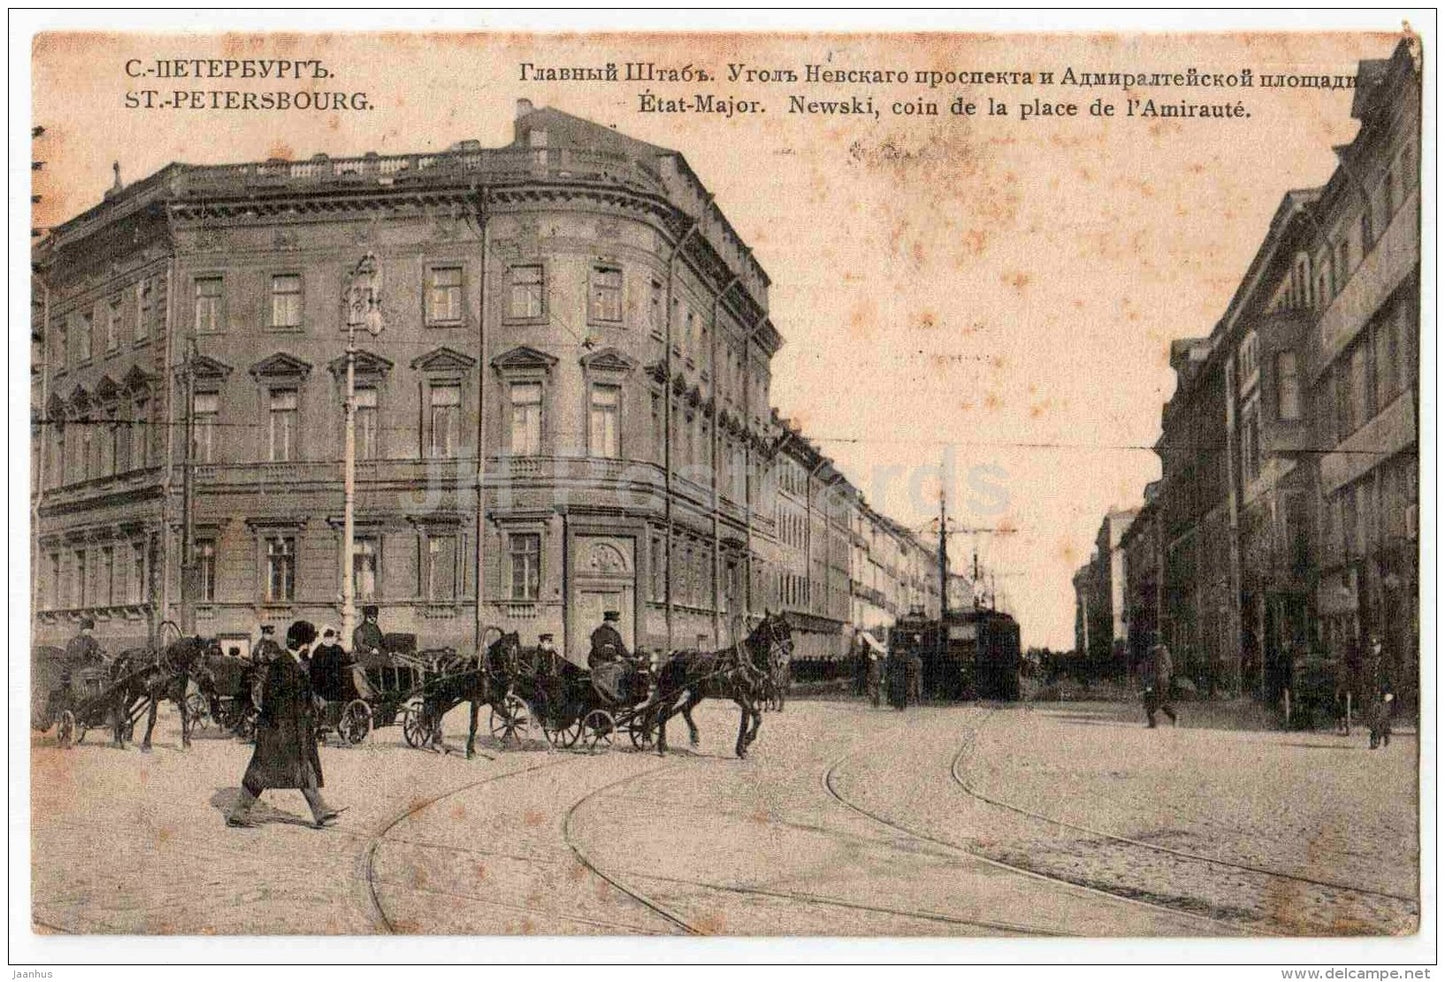 Etat-Major - Newski, coin de la place de l´Amiraute - tram - St. Petersburg - sent from Russia to Estonia Reval 19 - JH Postcards